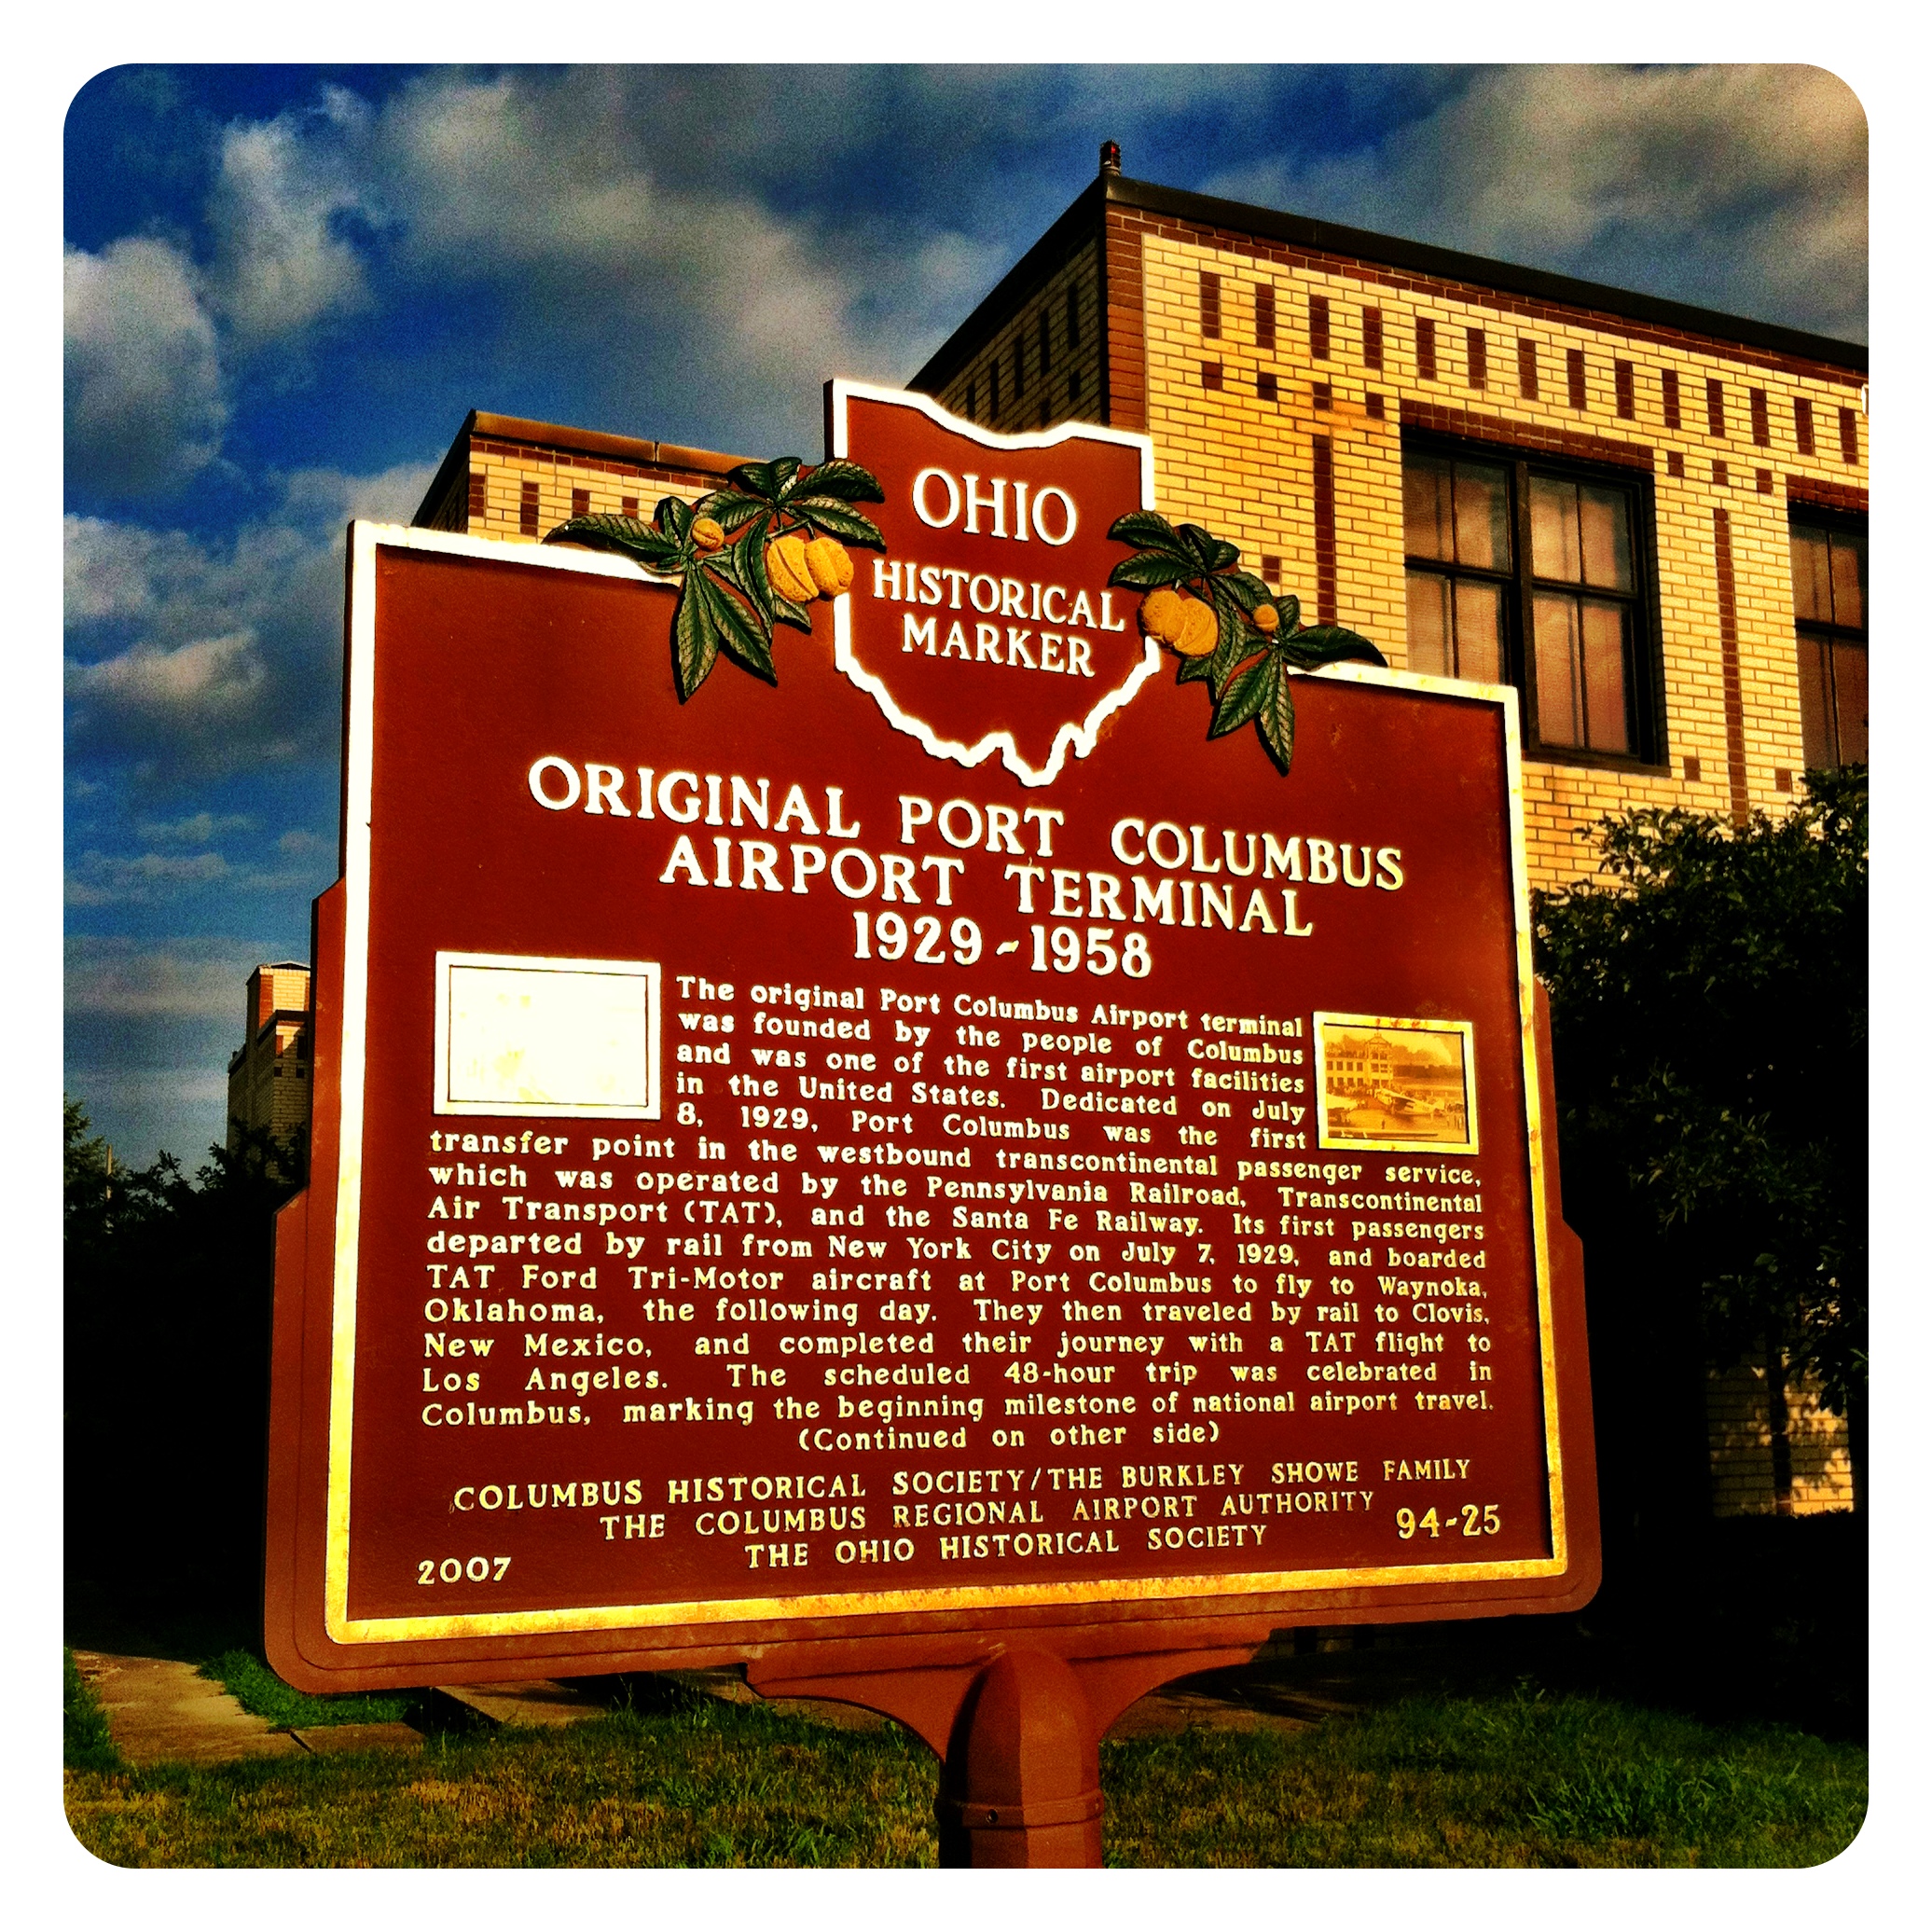 Remarkable Ohio ... Ohio Historical Marker #94-25 Original Port Columbus Terminal 